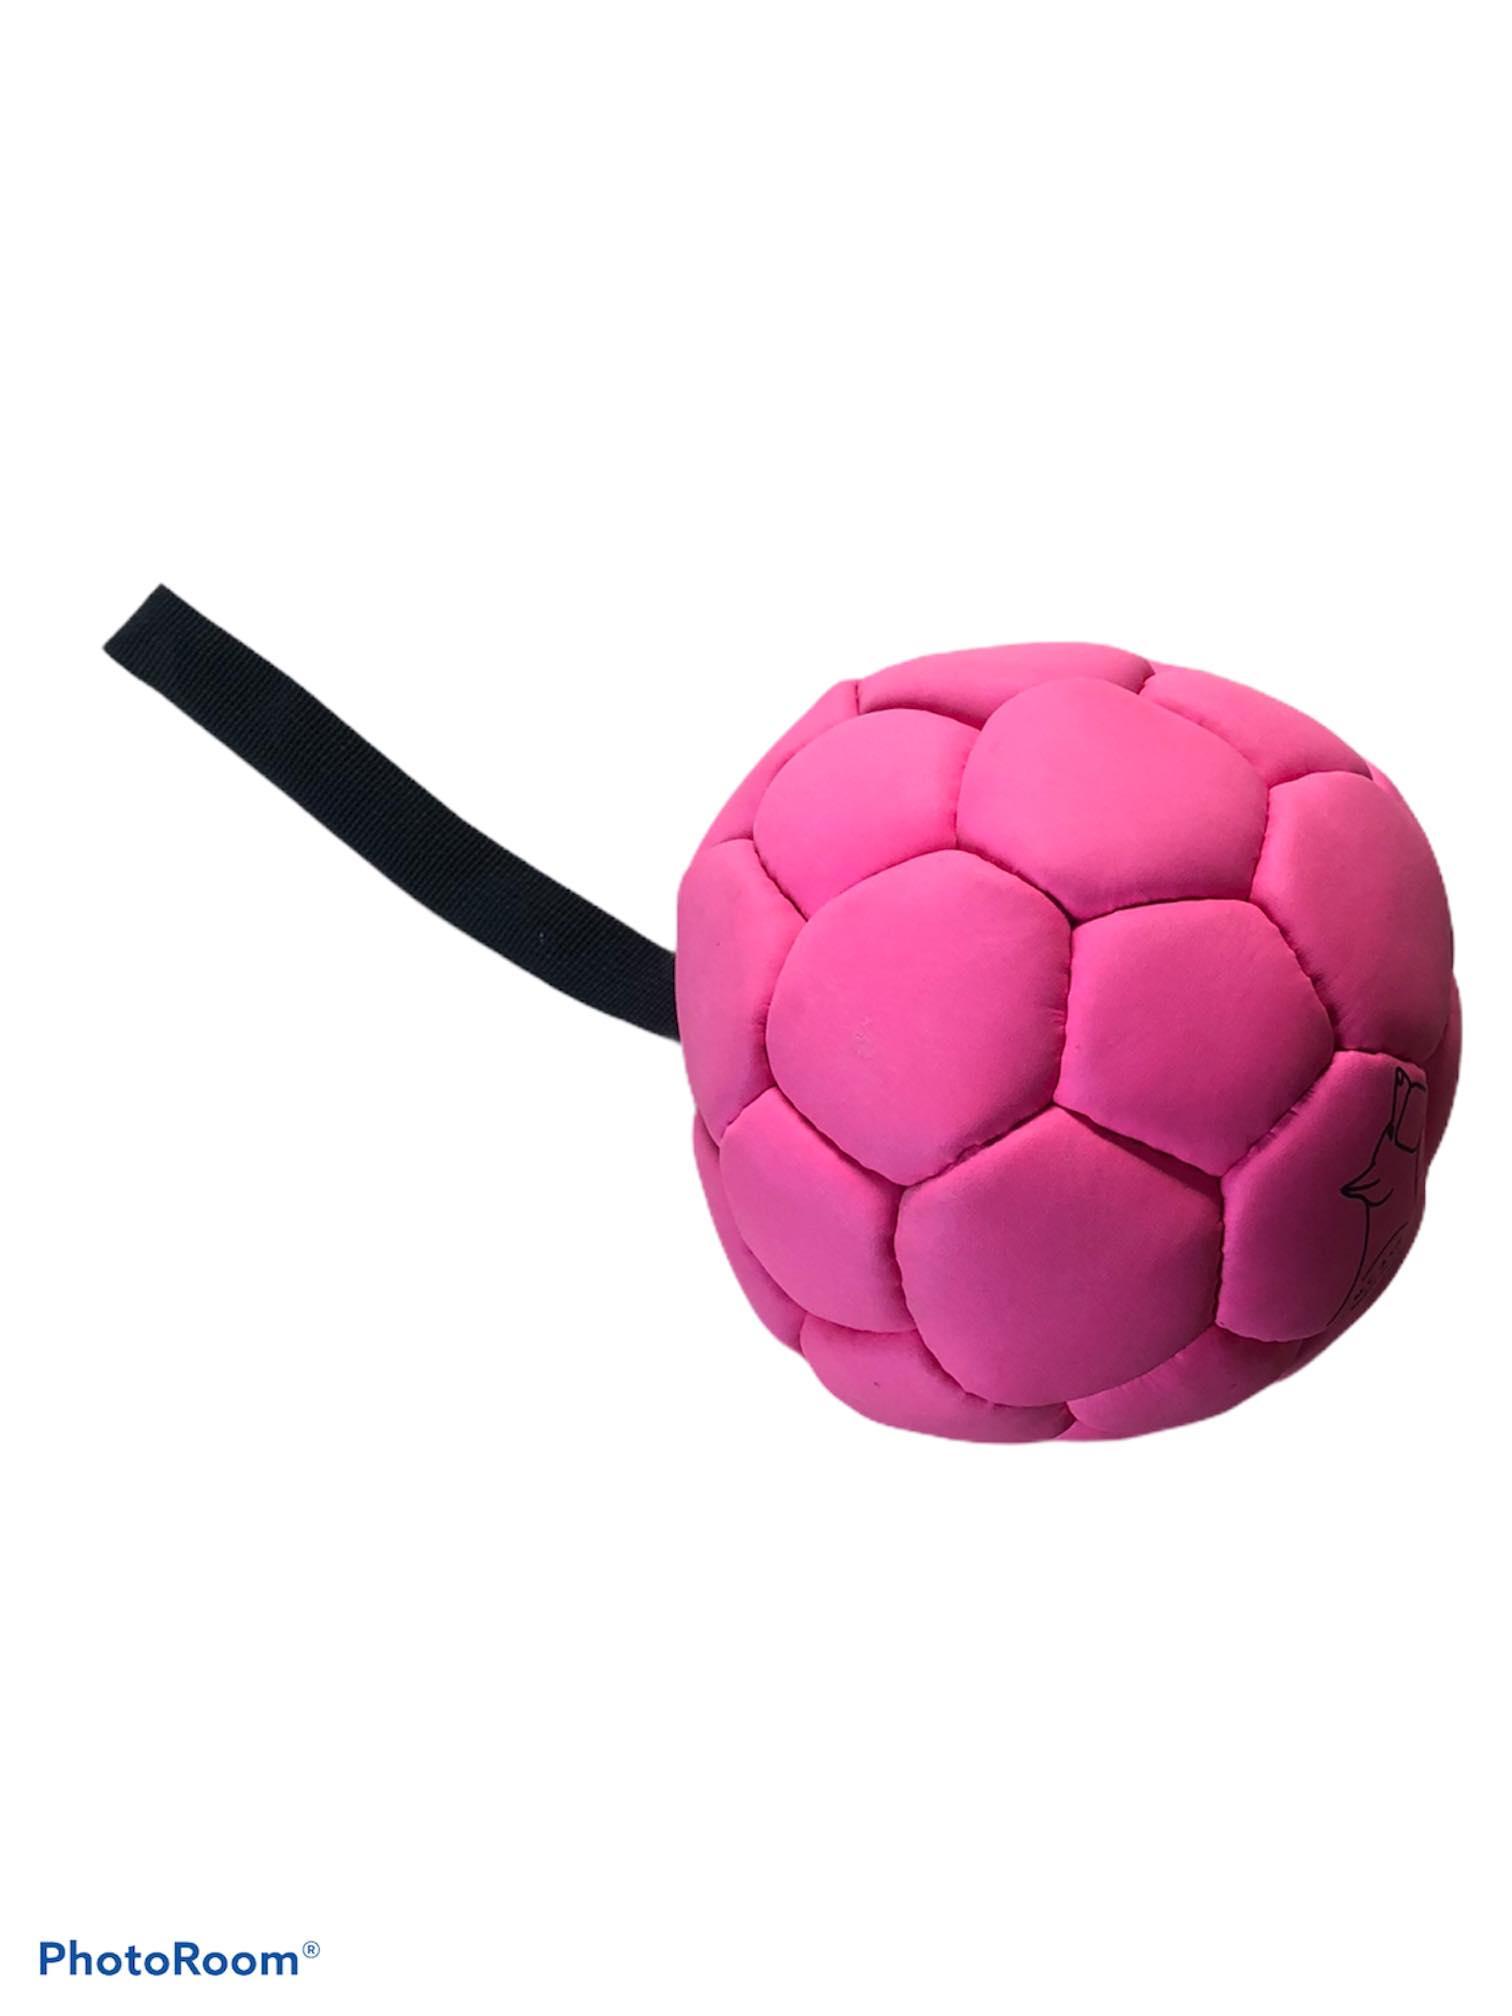 Ballon de football dégradé résistant à l'usure en cuir PU REGAIL